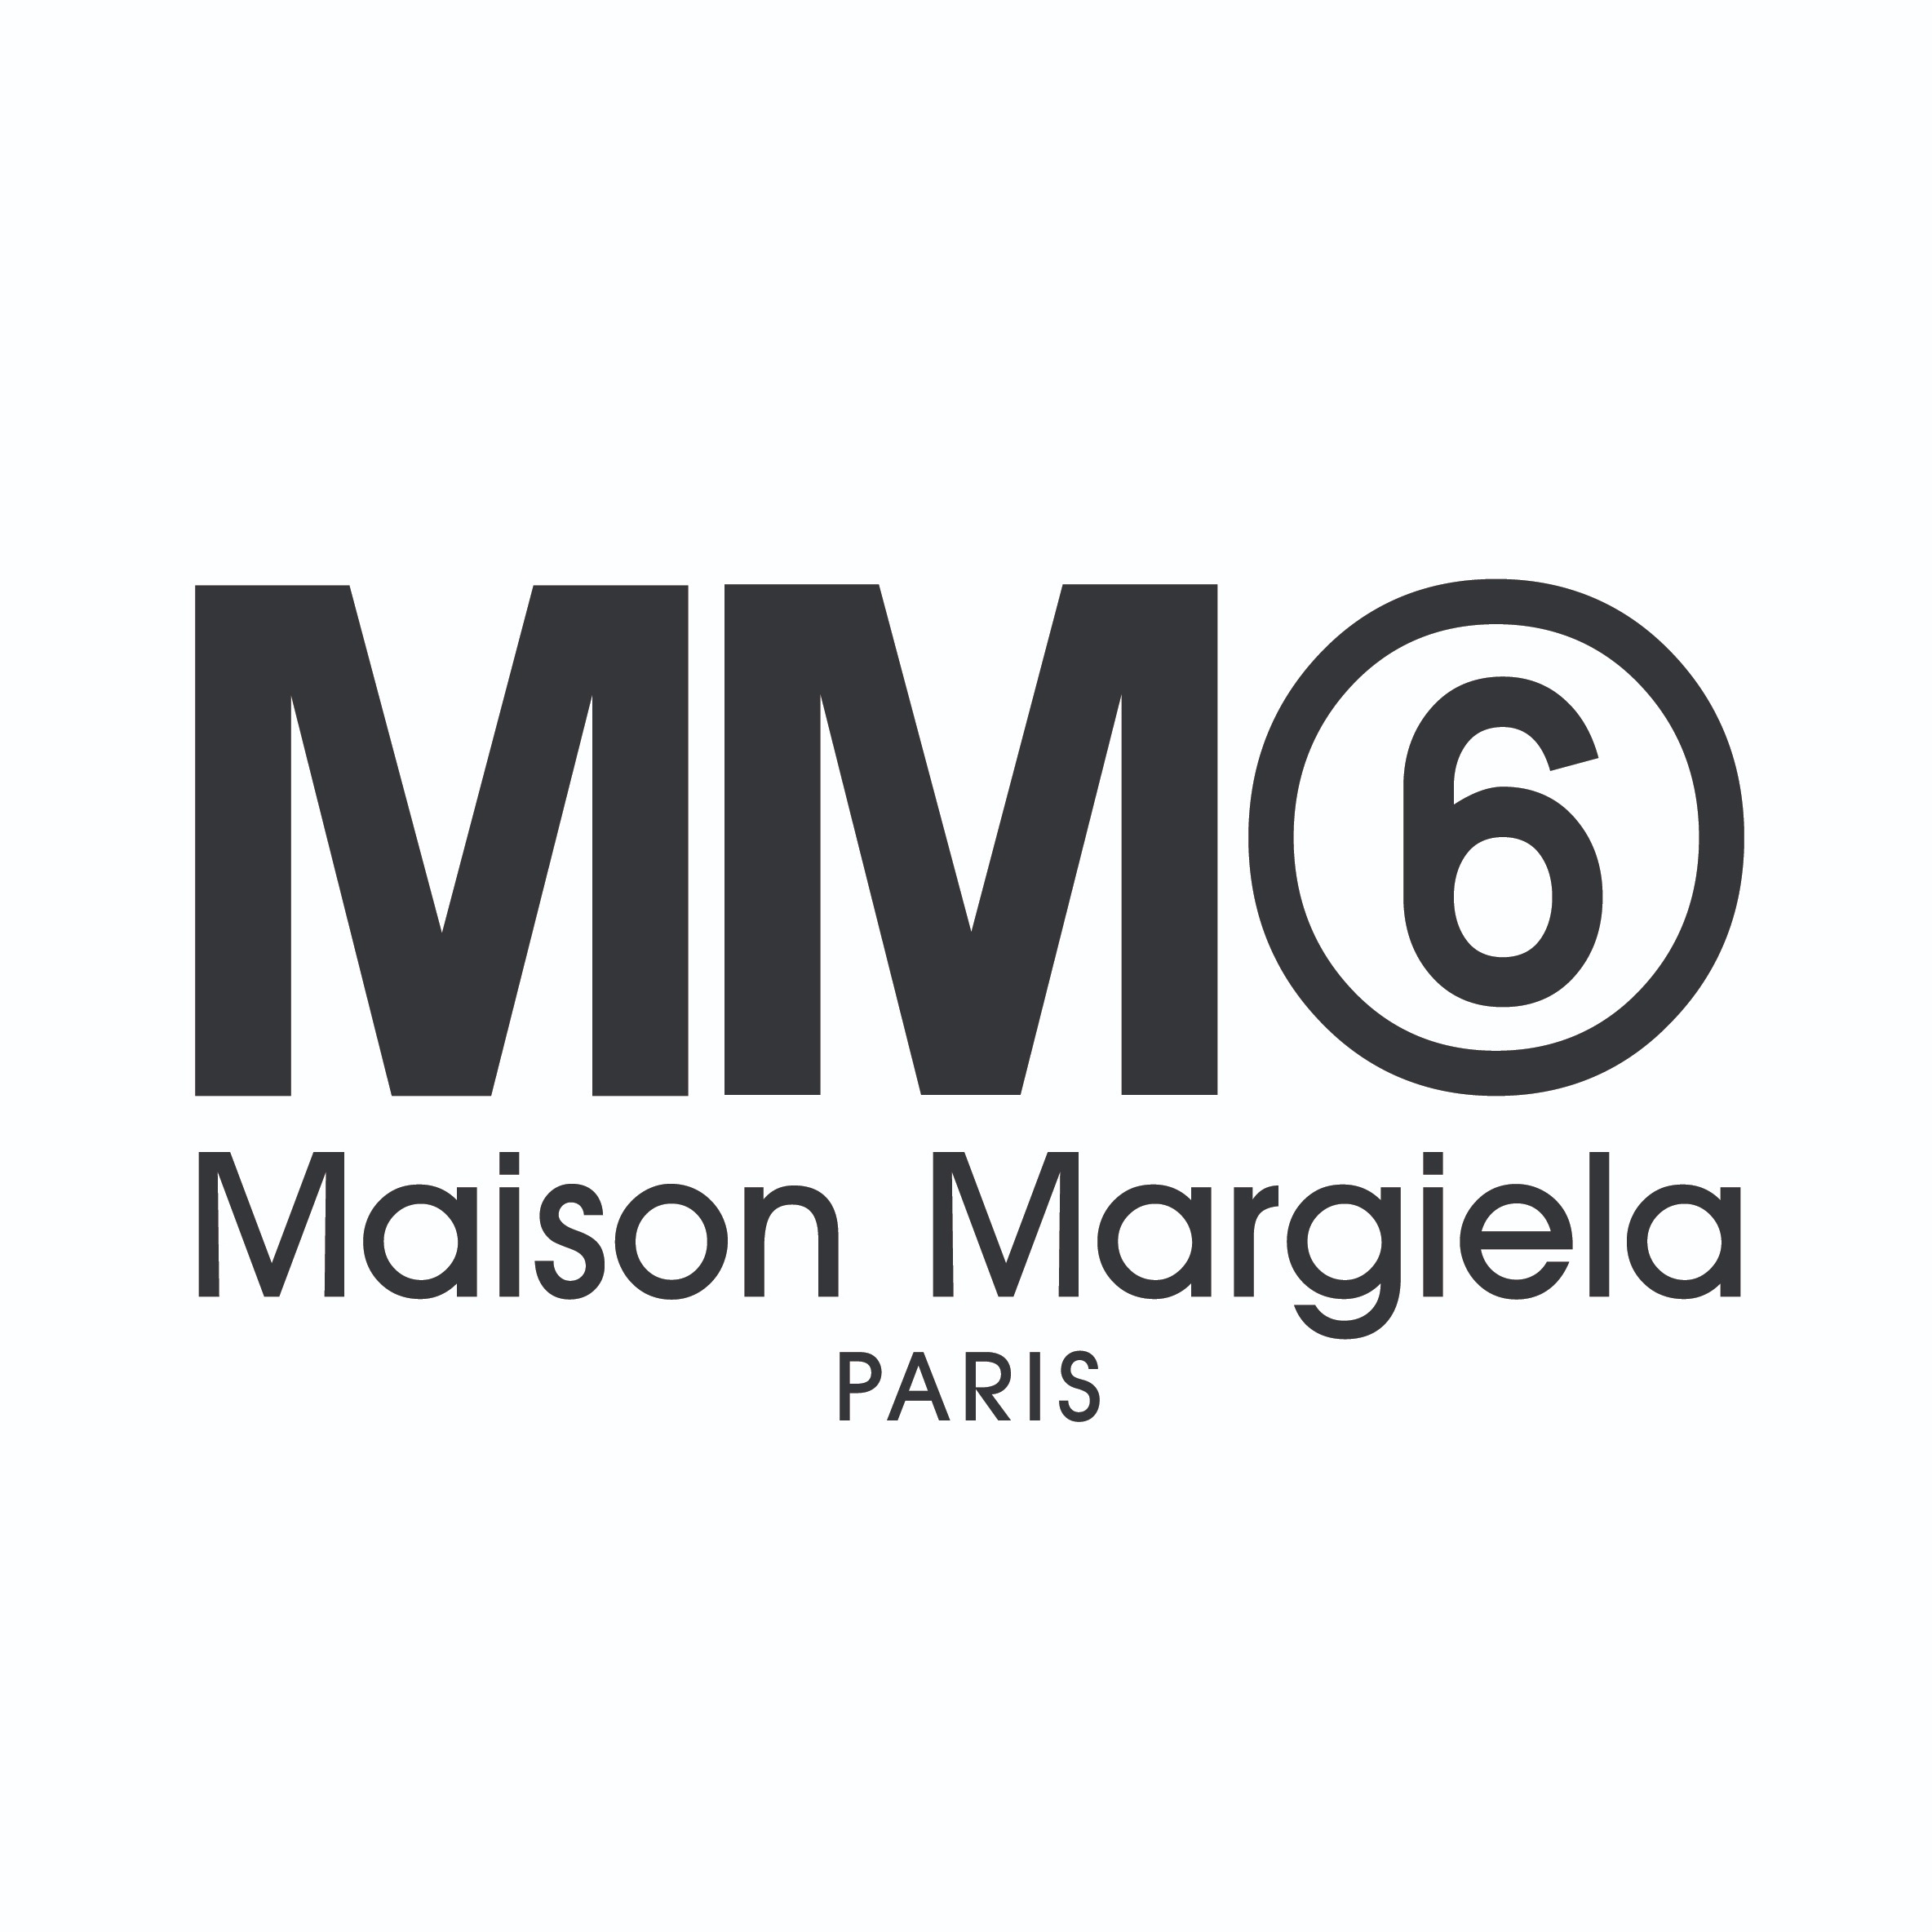 MM6 Maison Margiela Osaka Umeda Hankyu Logo